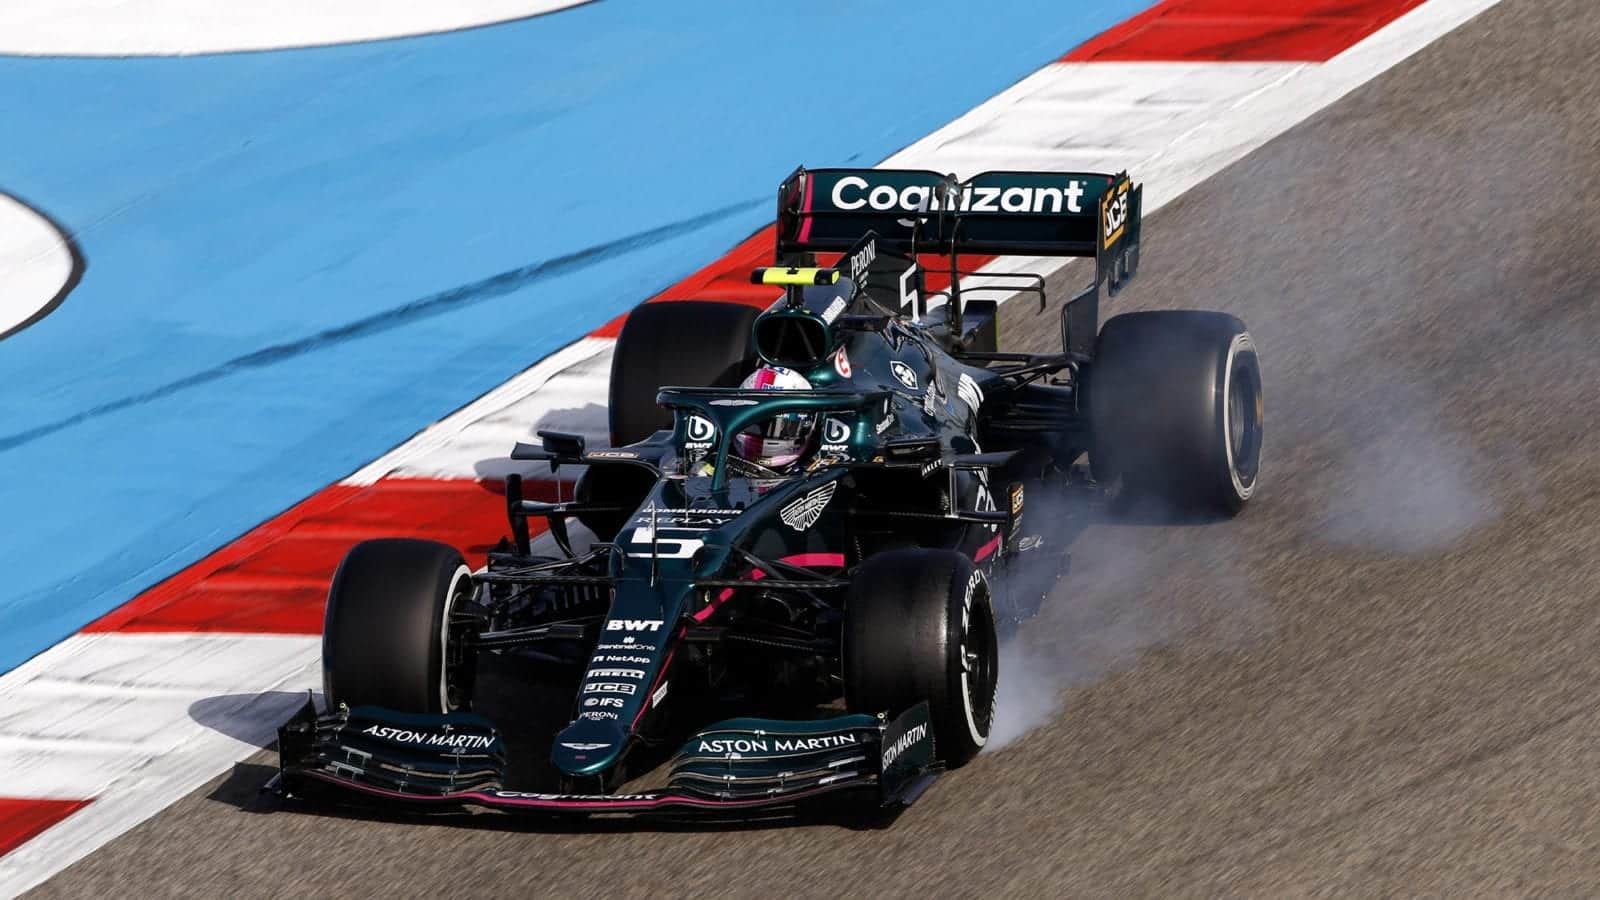 Sebastian Vettel locks up his tyres during the 2021 Bahrain Grand Prix